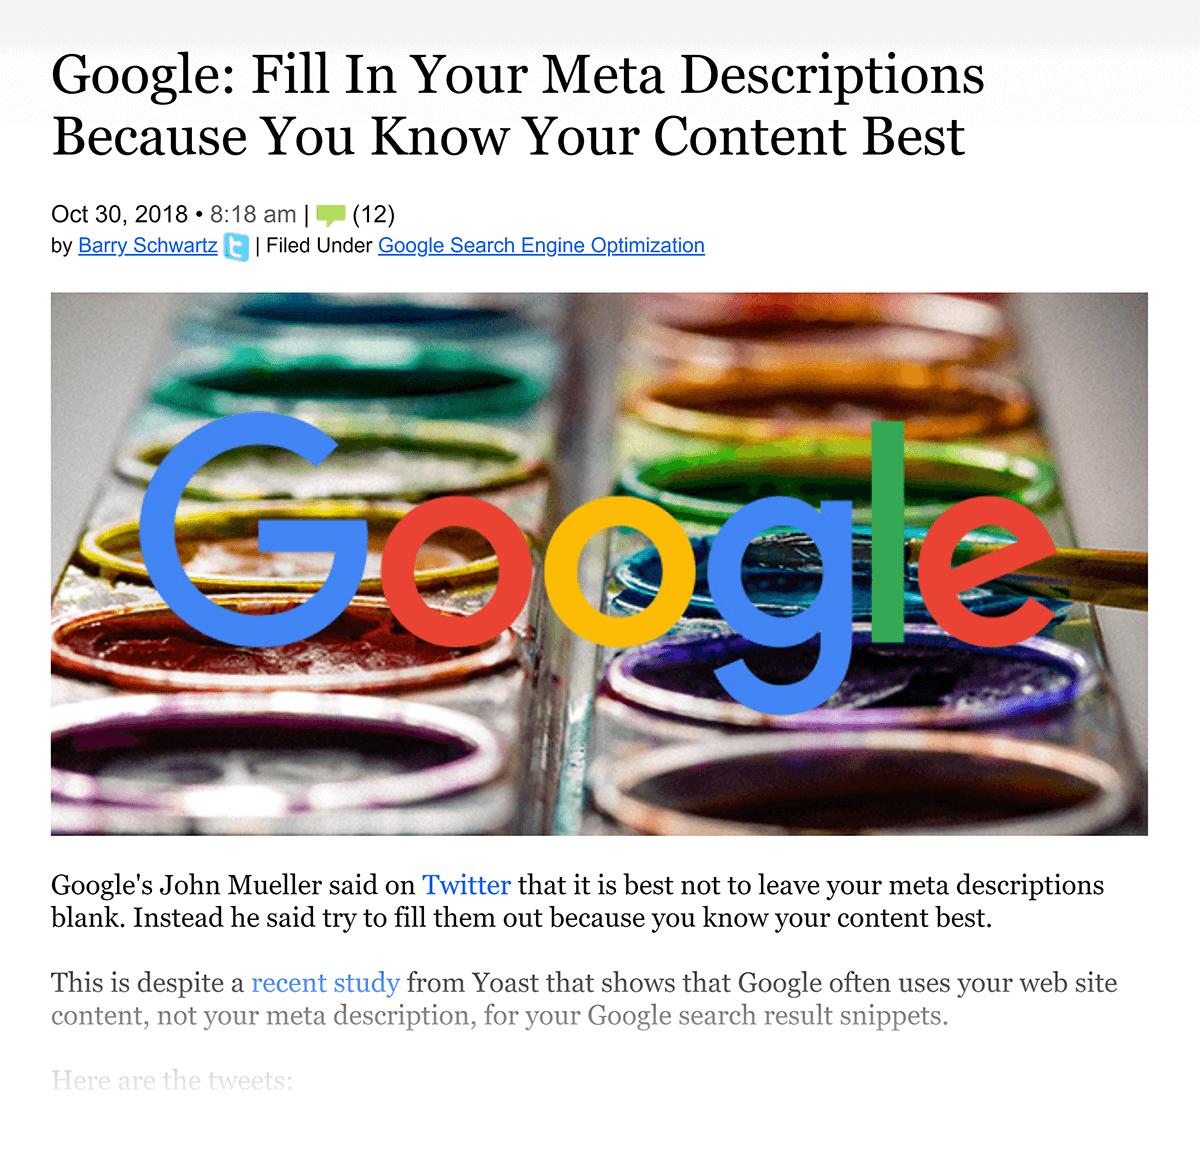 Google says "Fill in your meta descriptions"